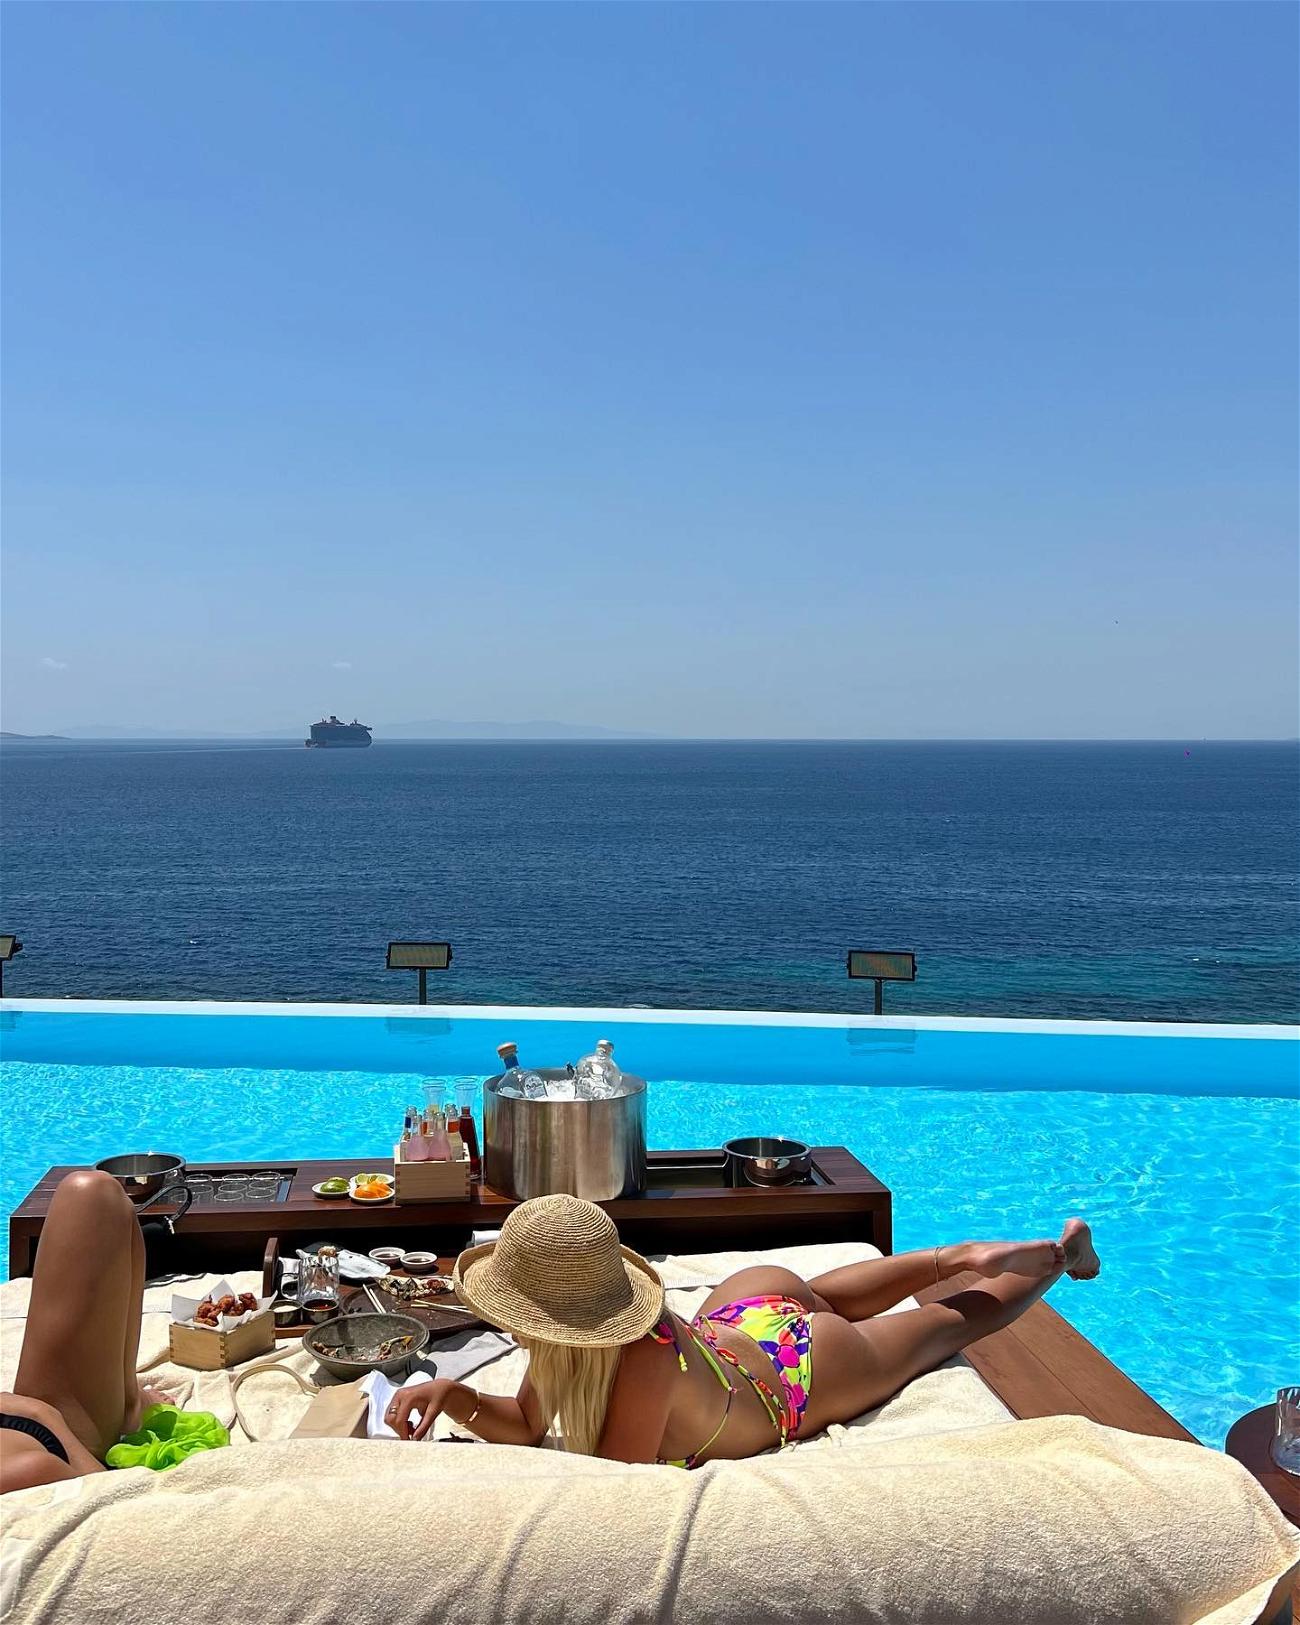 TikTok Star Alix Earle Sunbathes In Greece In A Colorful Bikini